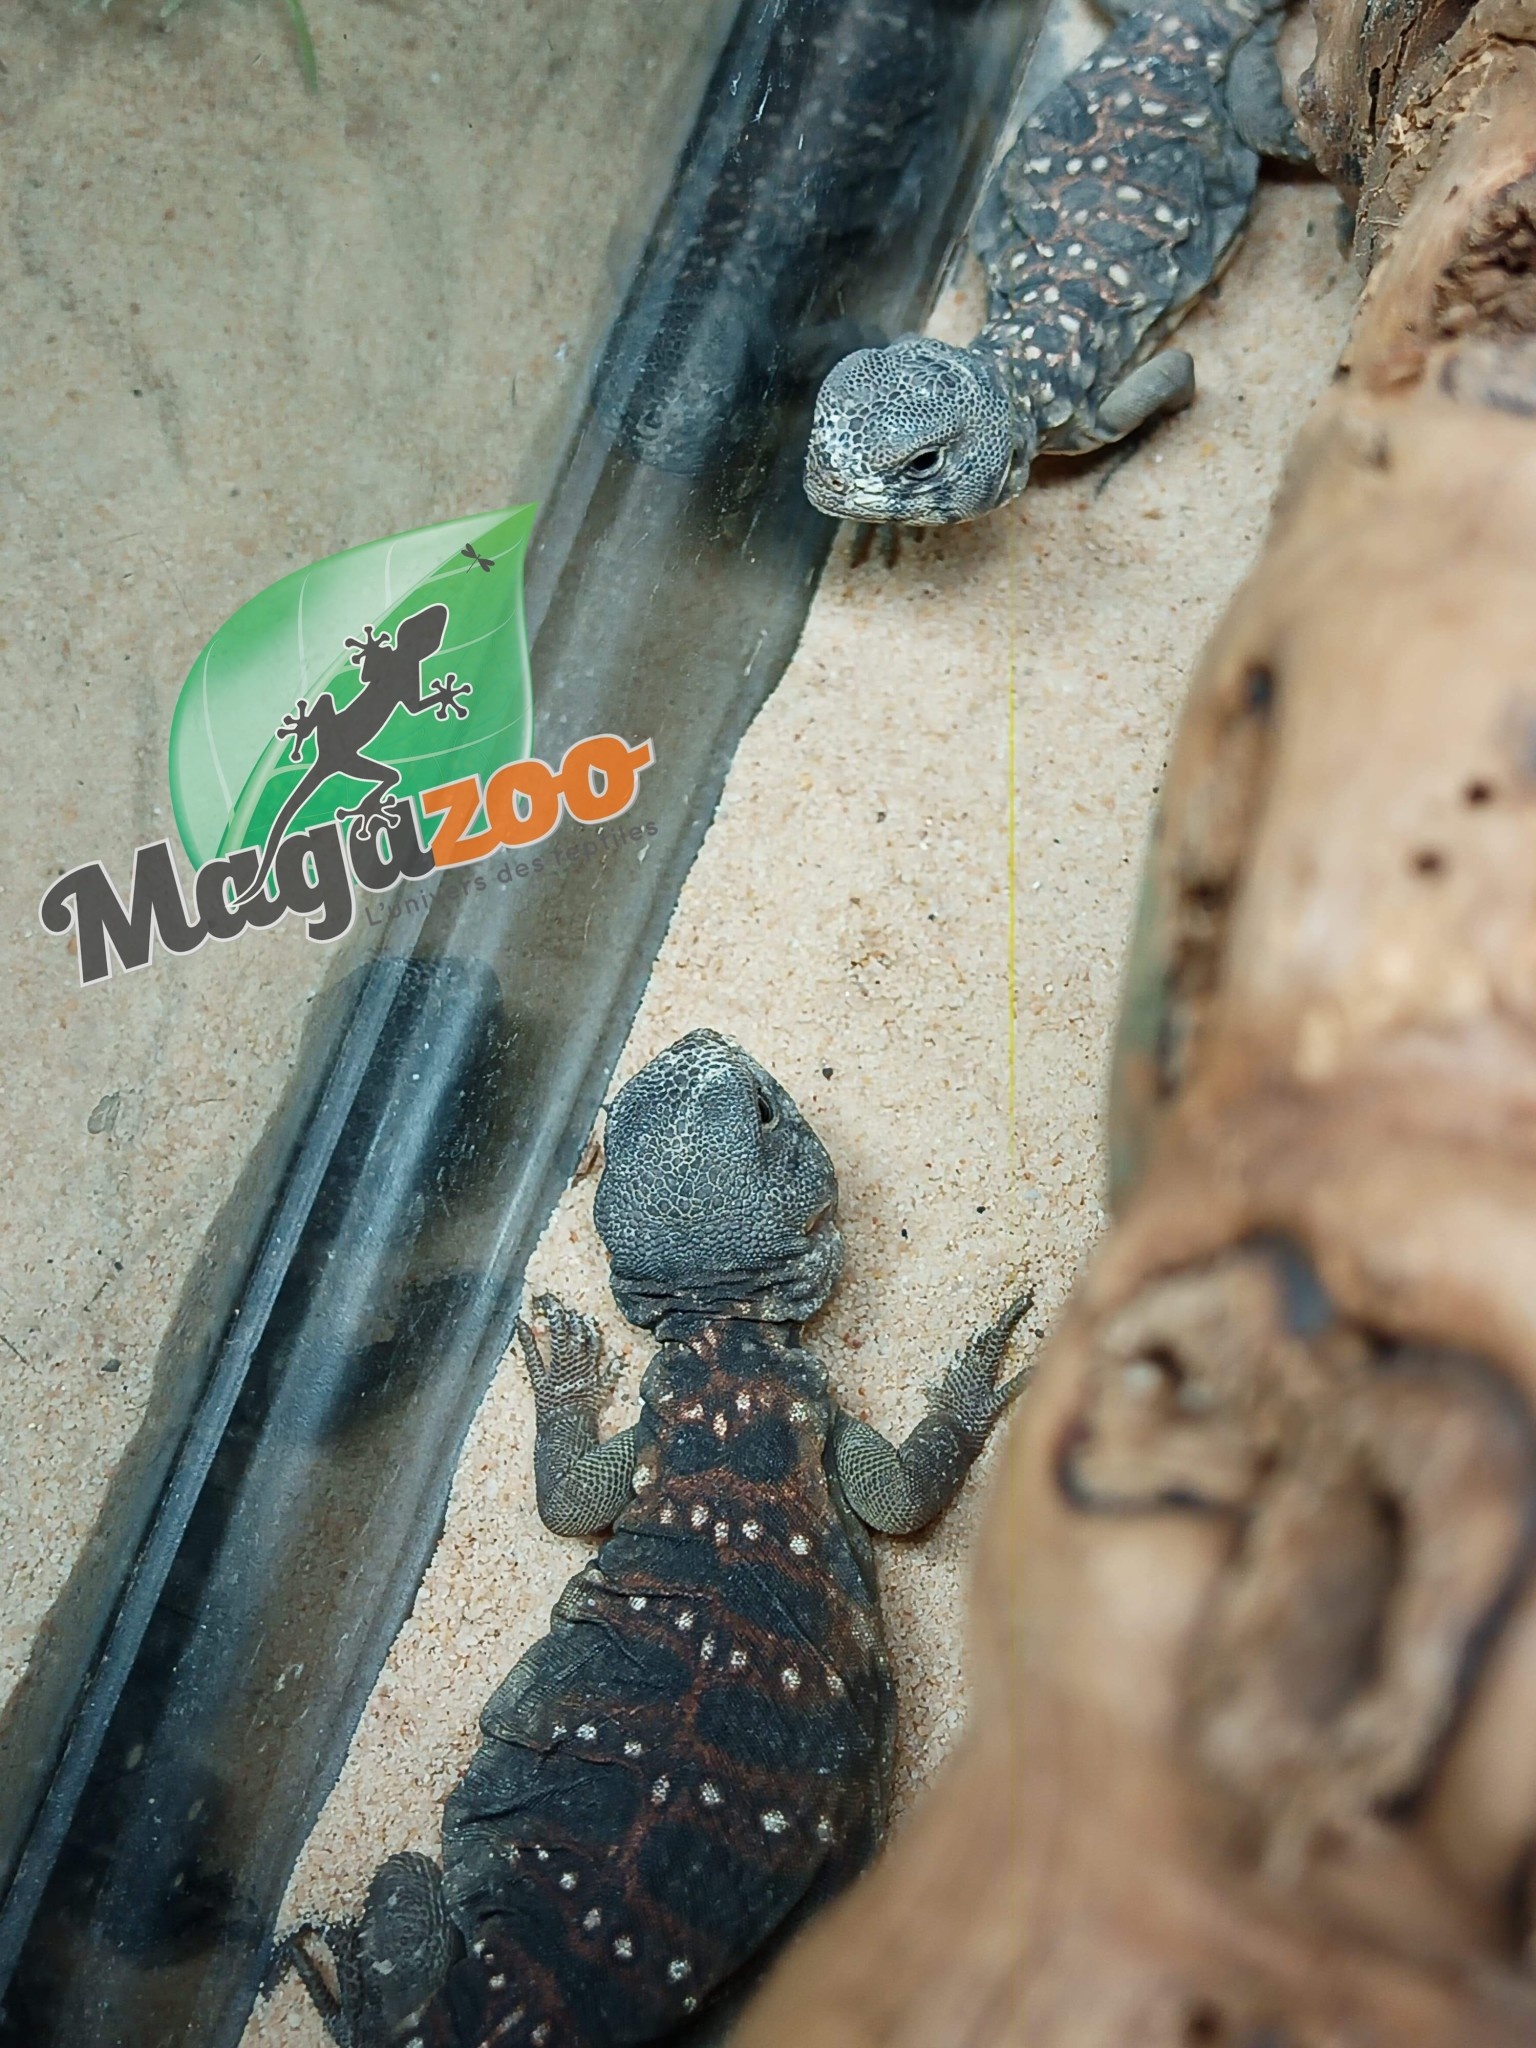 Magazoo Uromastyx ocellata born in captivity